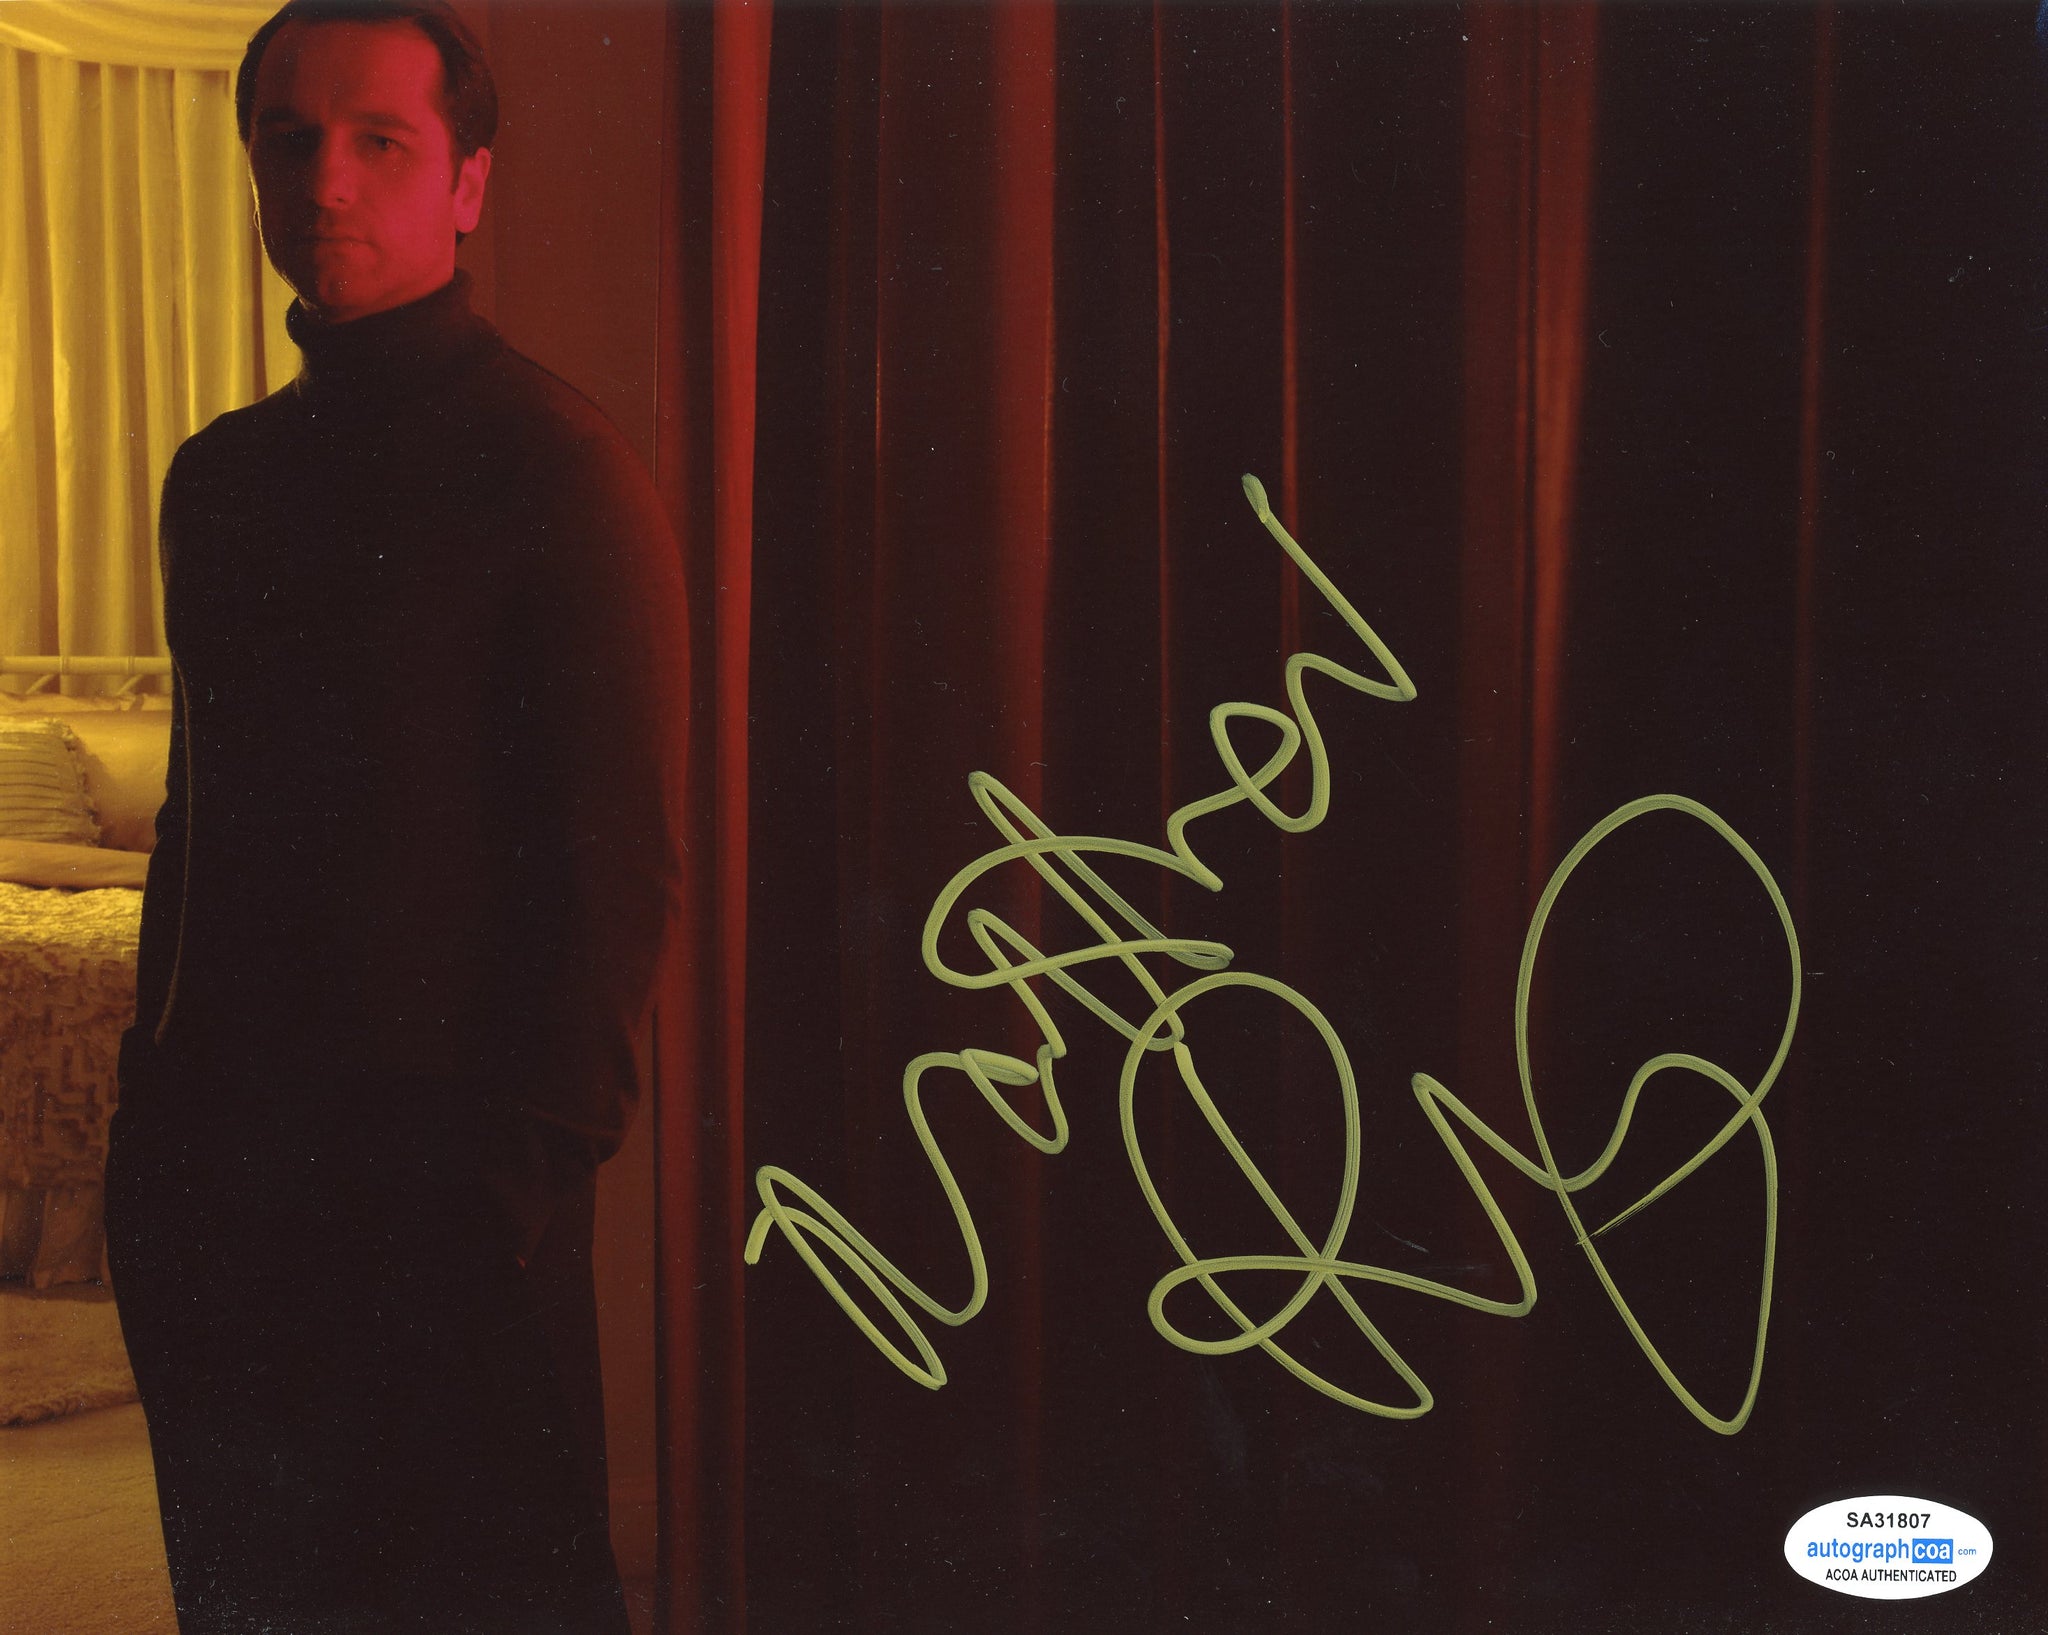 Matthew Rhys The Americans Signed Autograph 8x10 Photo ACOA - Outlaw Hobbies Authentic Autographs